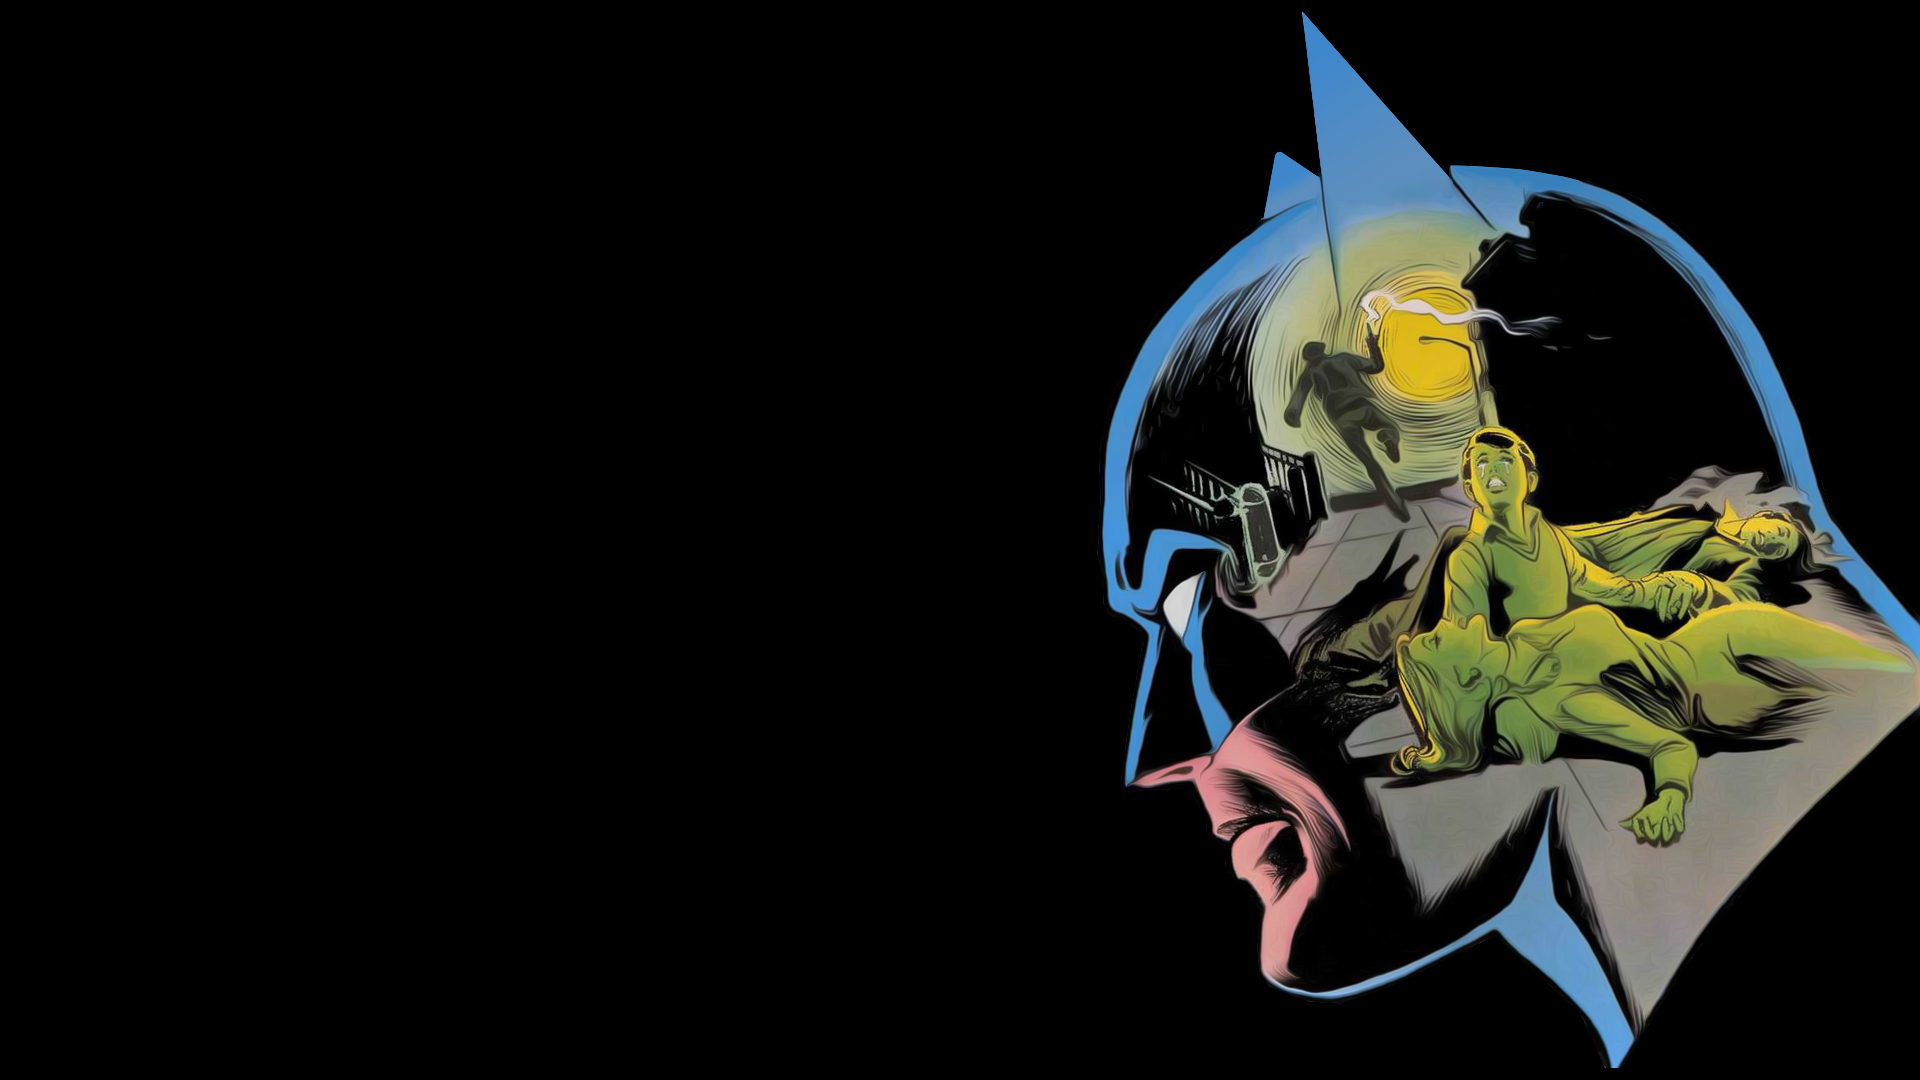 Batman Puter Wallpaper Desktop Background